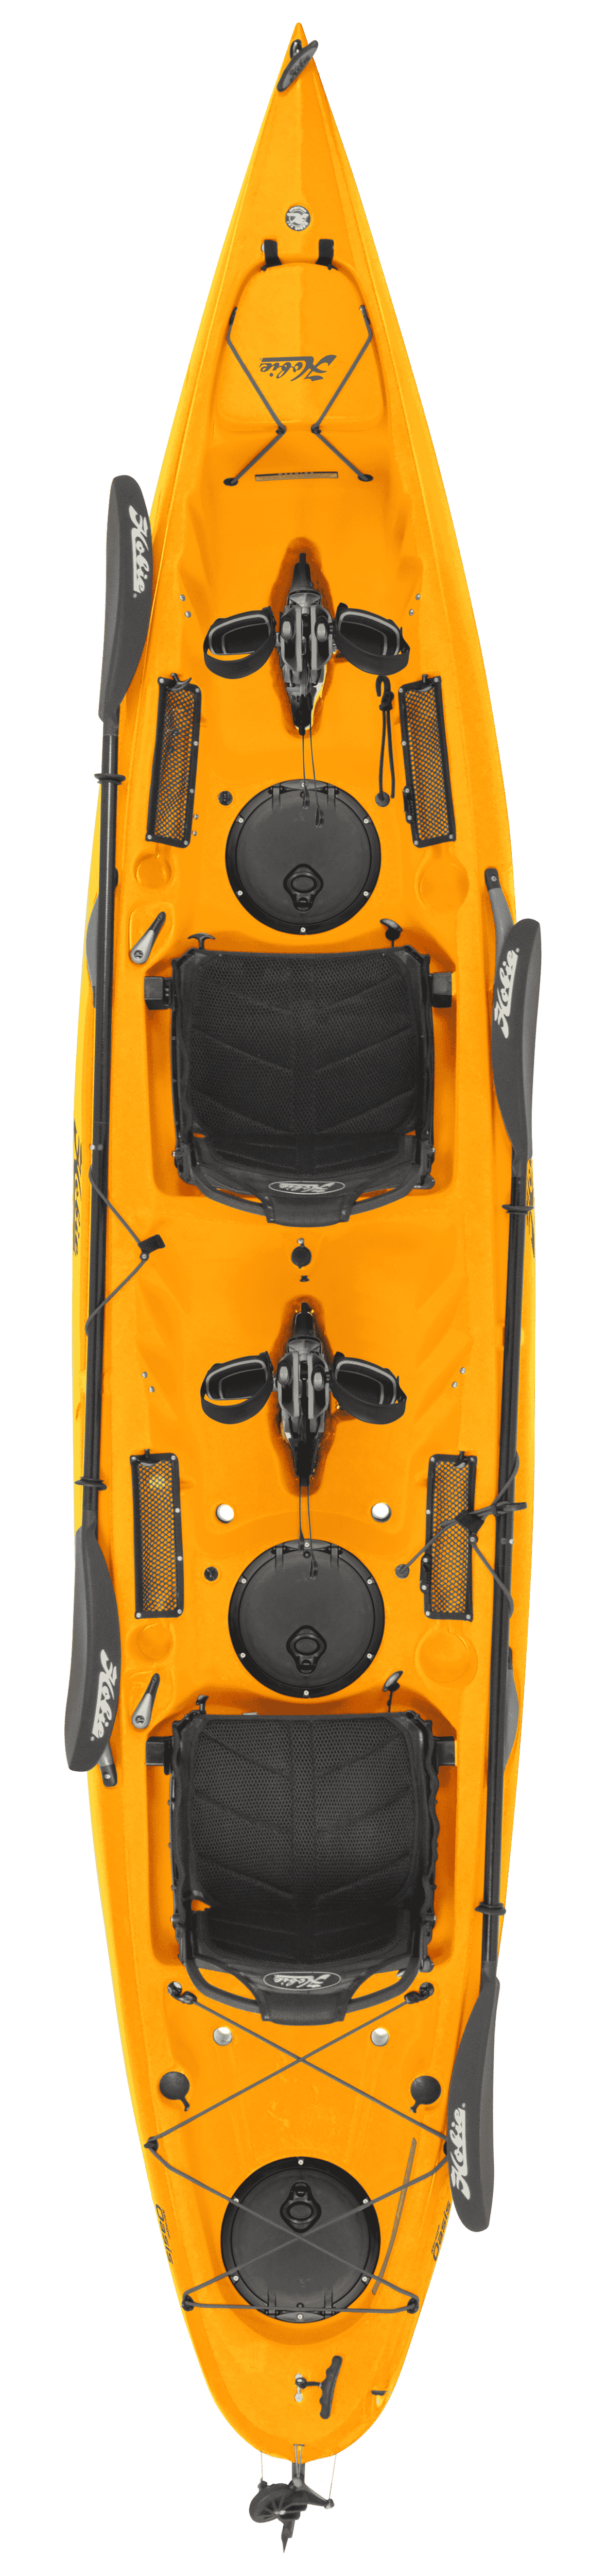 Hobie Oasis tandem pedal kayak top view showing deck layout and standard features. Colour: Papaya Orange